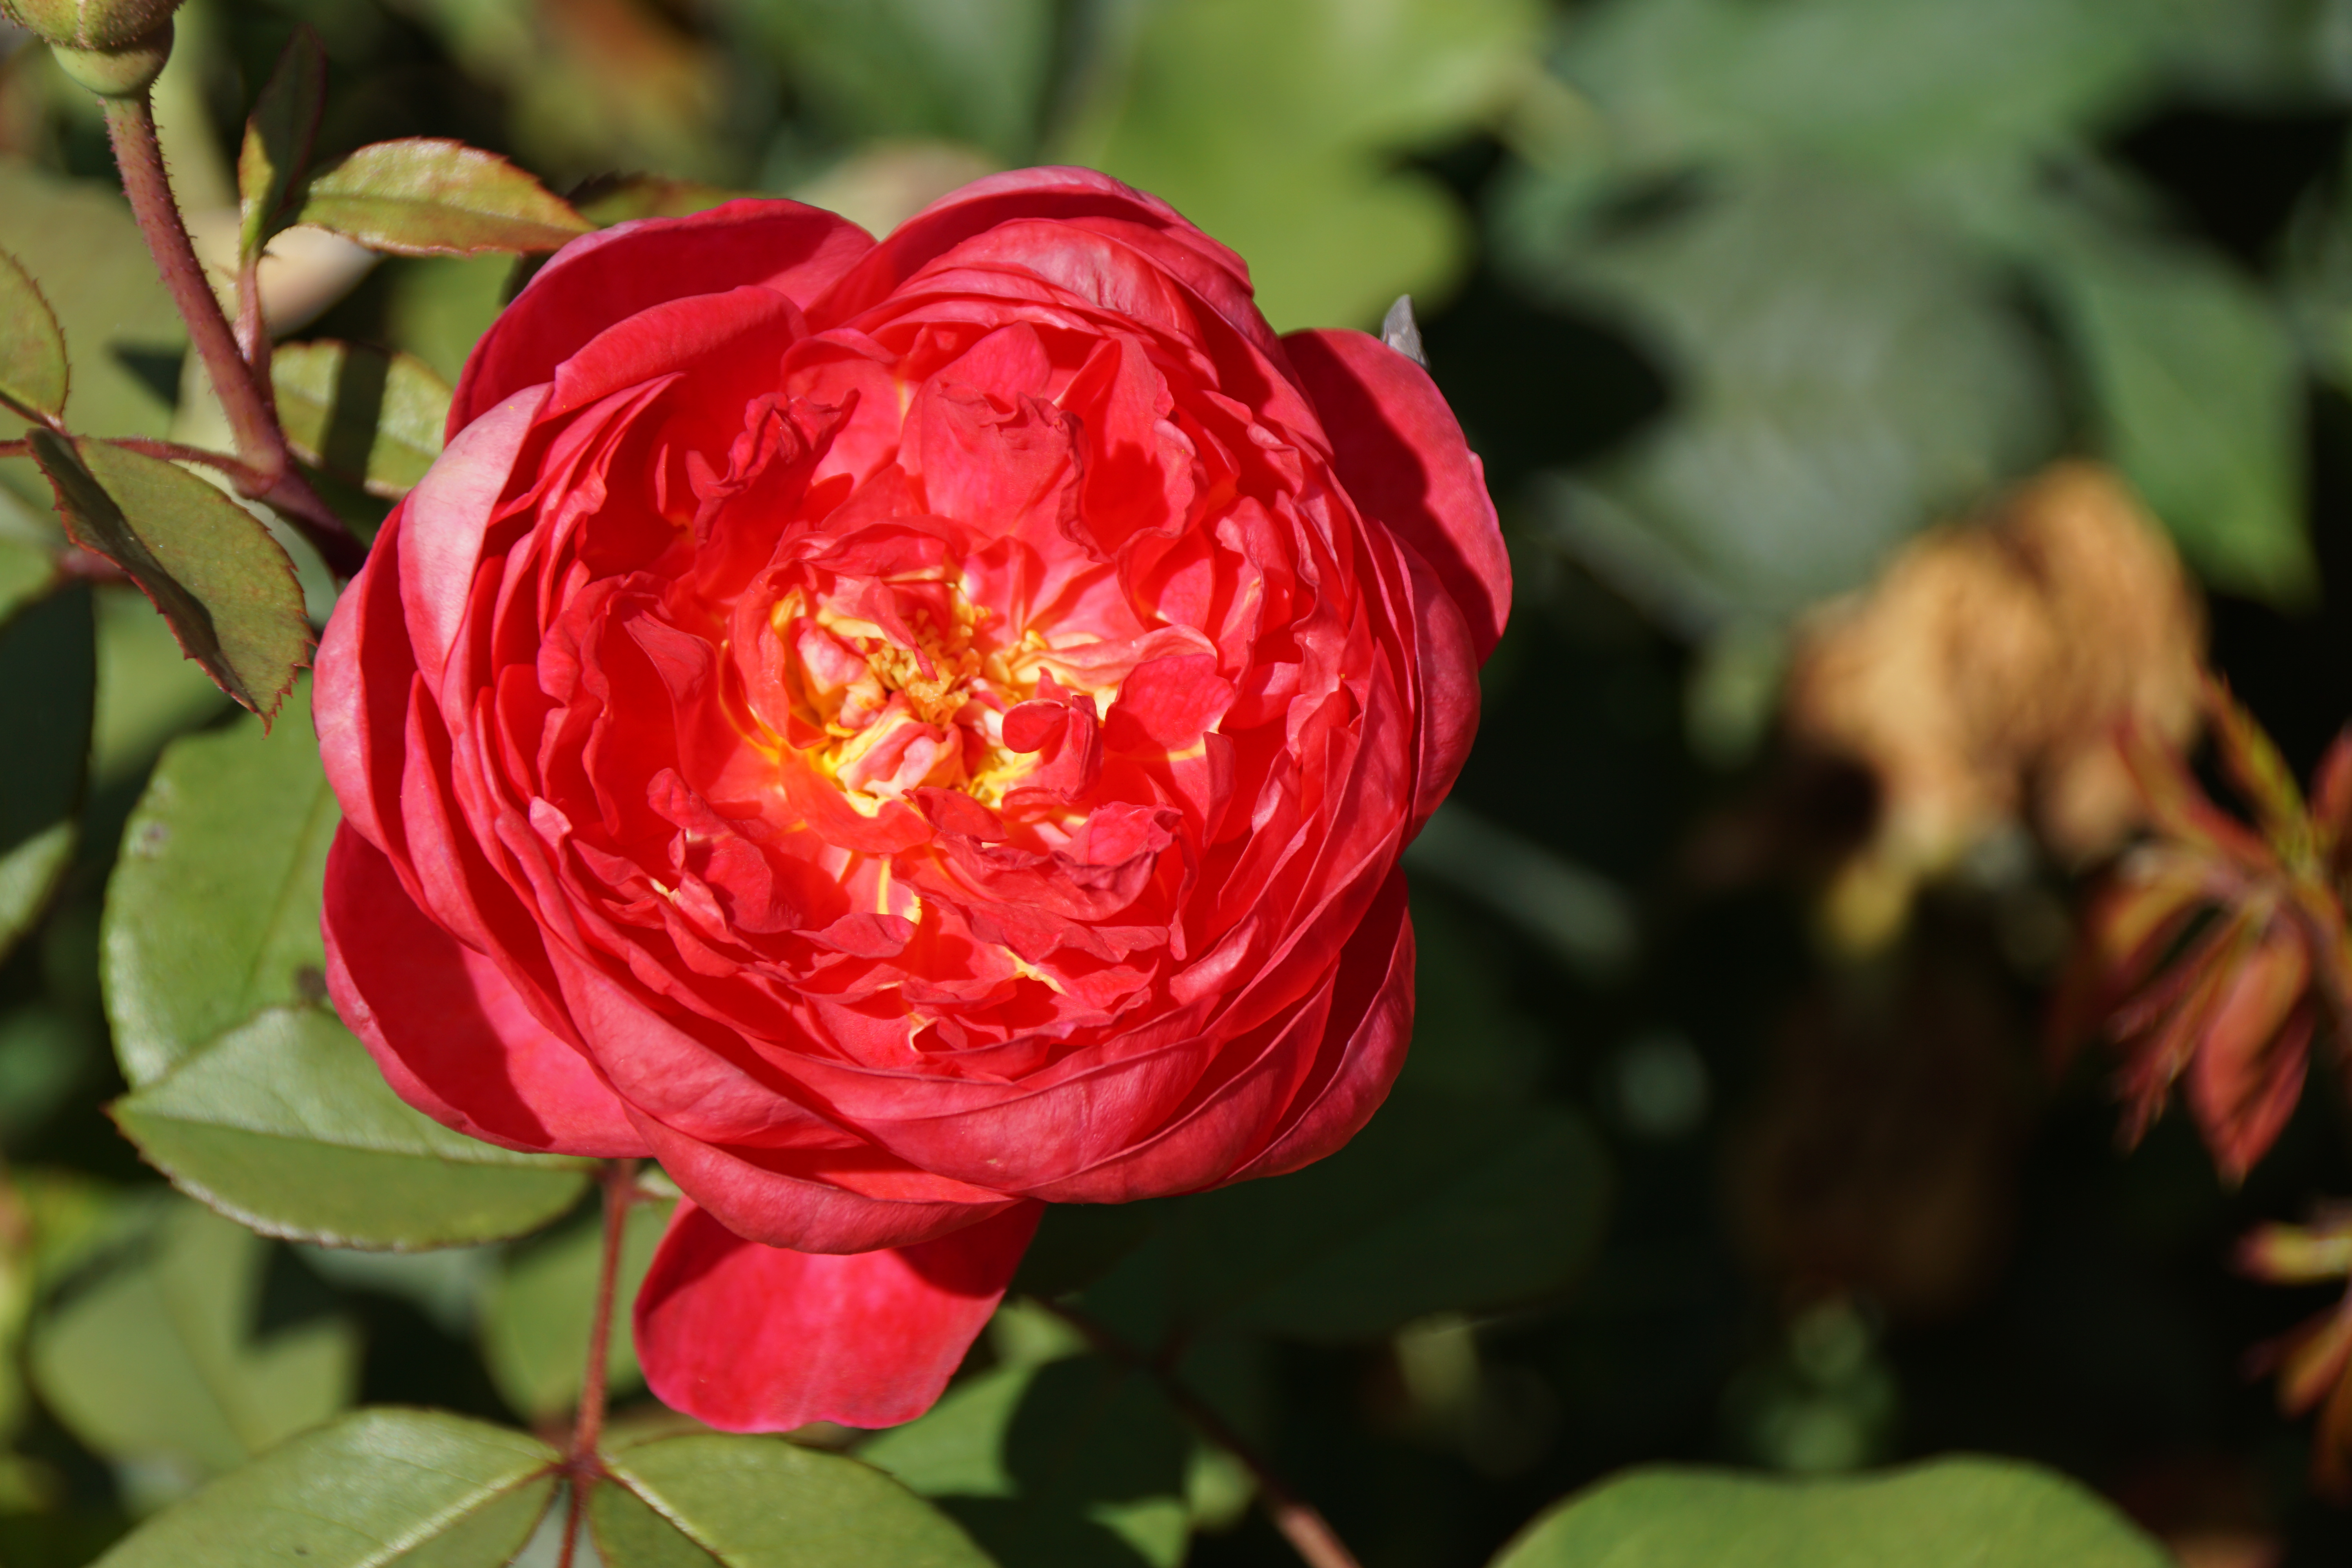 A wilde rose (red) in full bloom